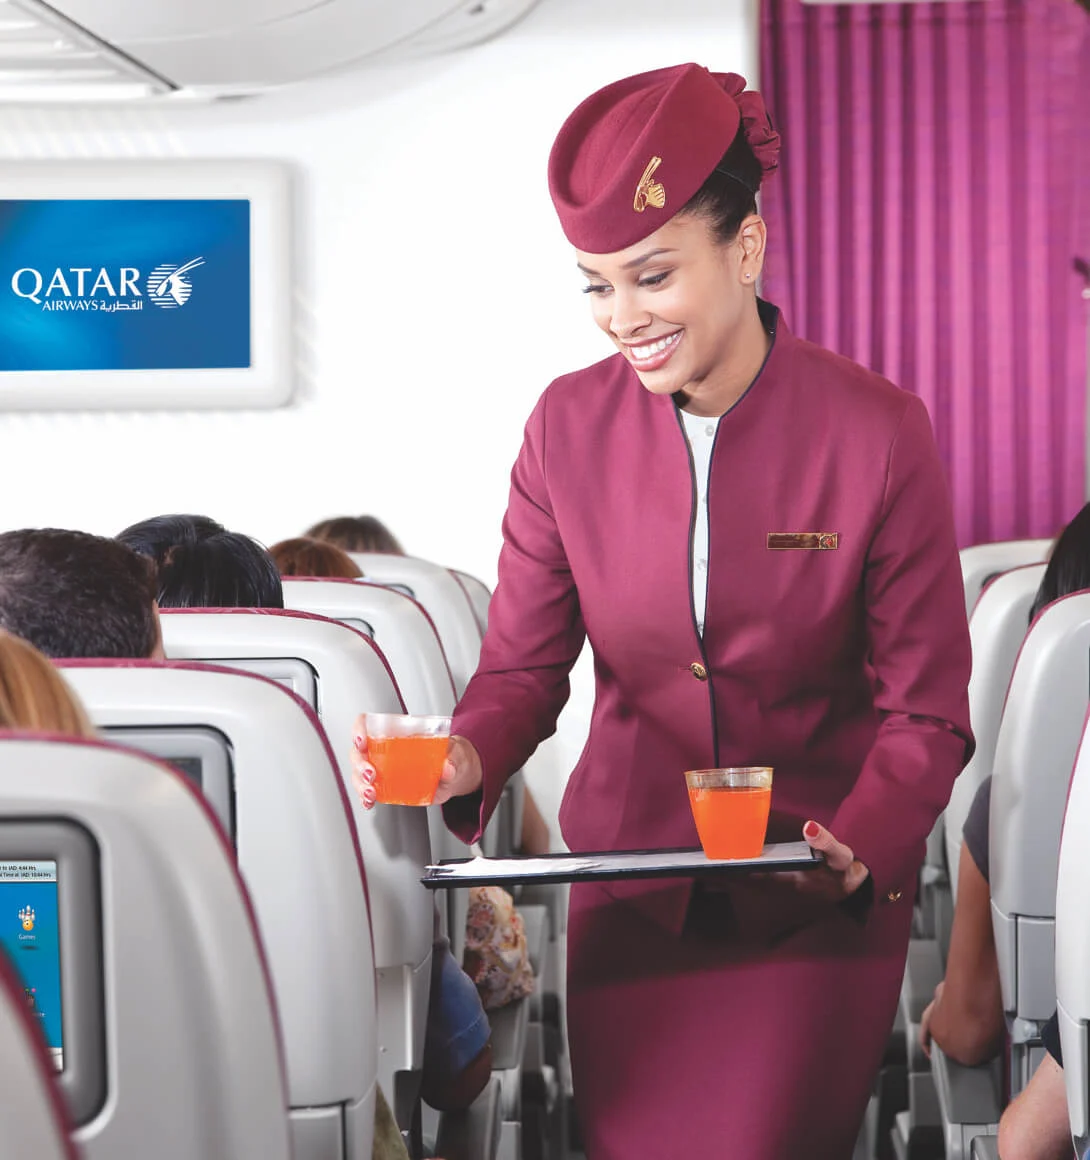 Qatar airways.com